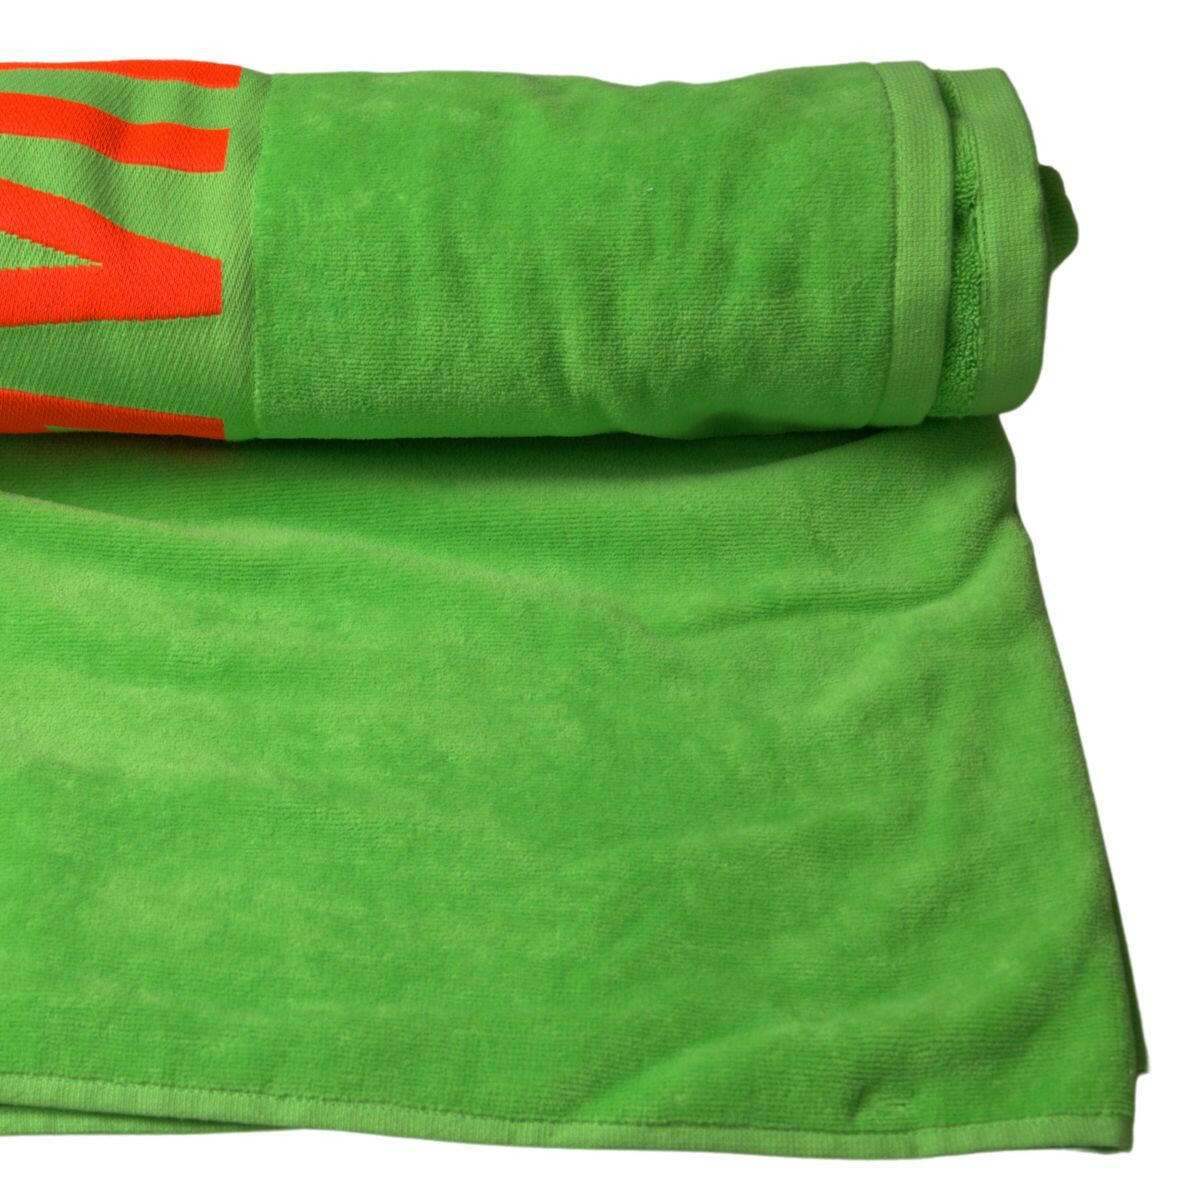 Dsquared² Green Logo Print Cotton Soft Unisex Beach Towel - GENUINE AUTHENTIC BRAND LLC  